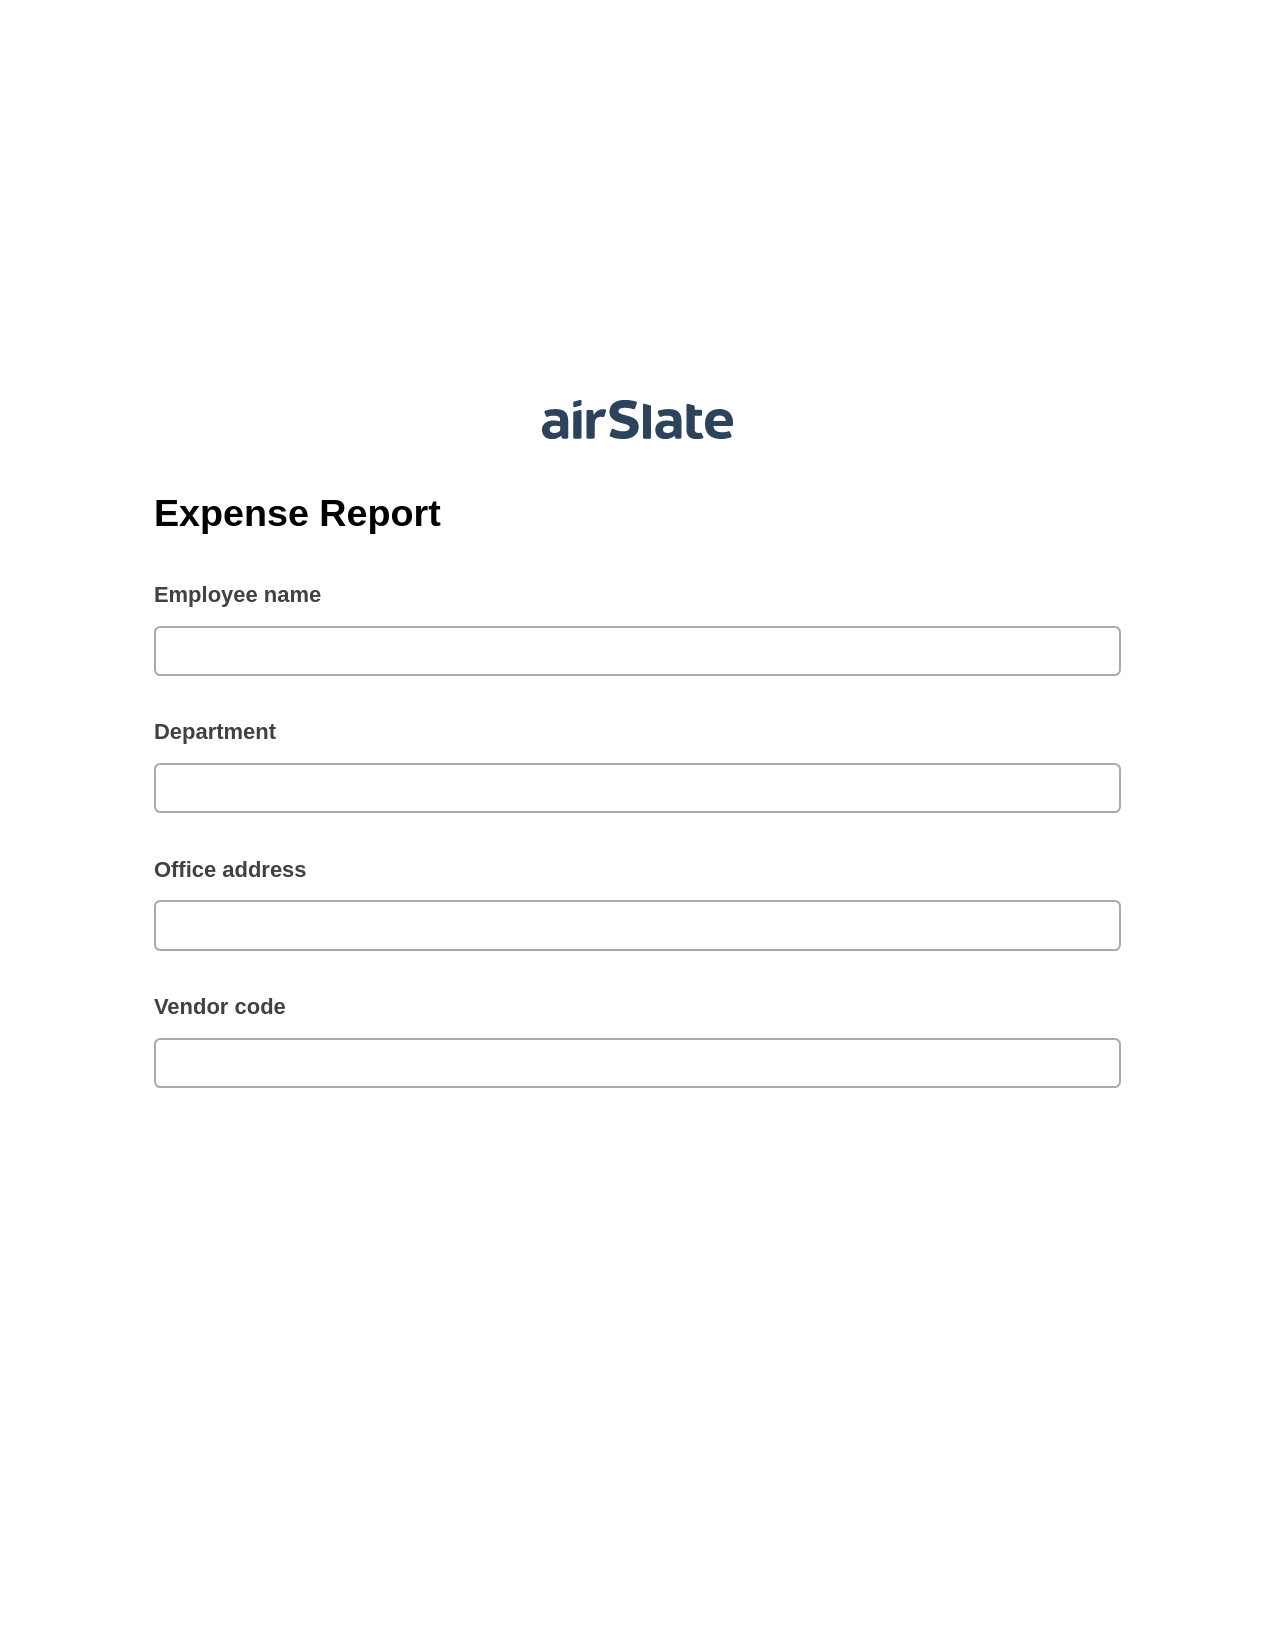 Multirole Expense Report Pre-fill Slate from MS Dynamics 365 Records Bot, SendGrid send Campaign bot, Webhook Postfinish Bot